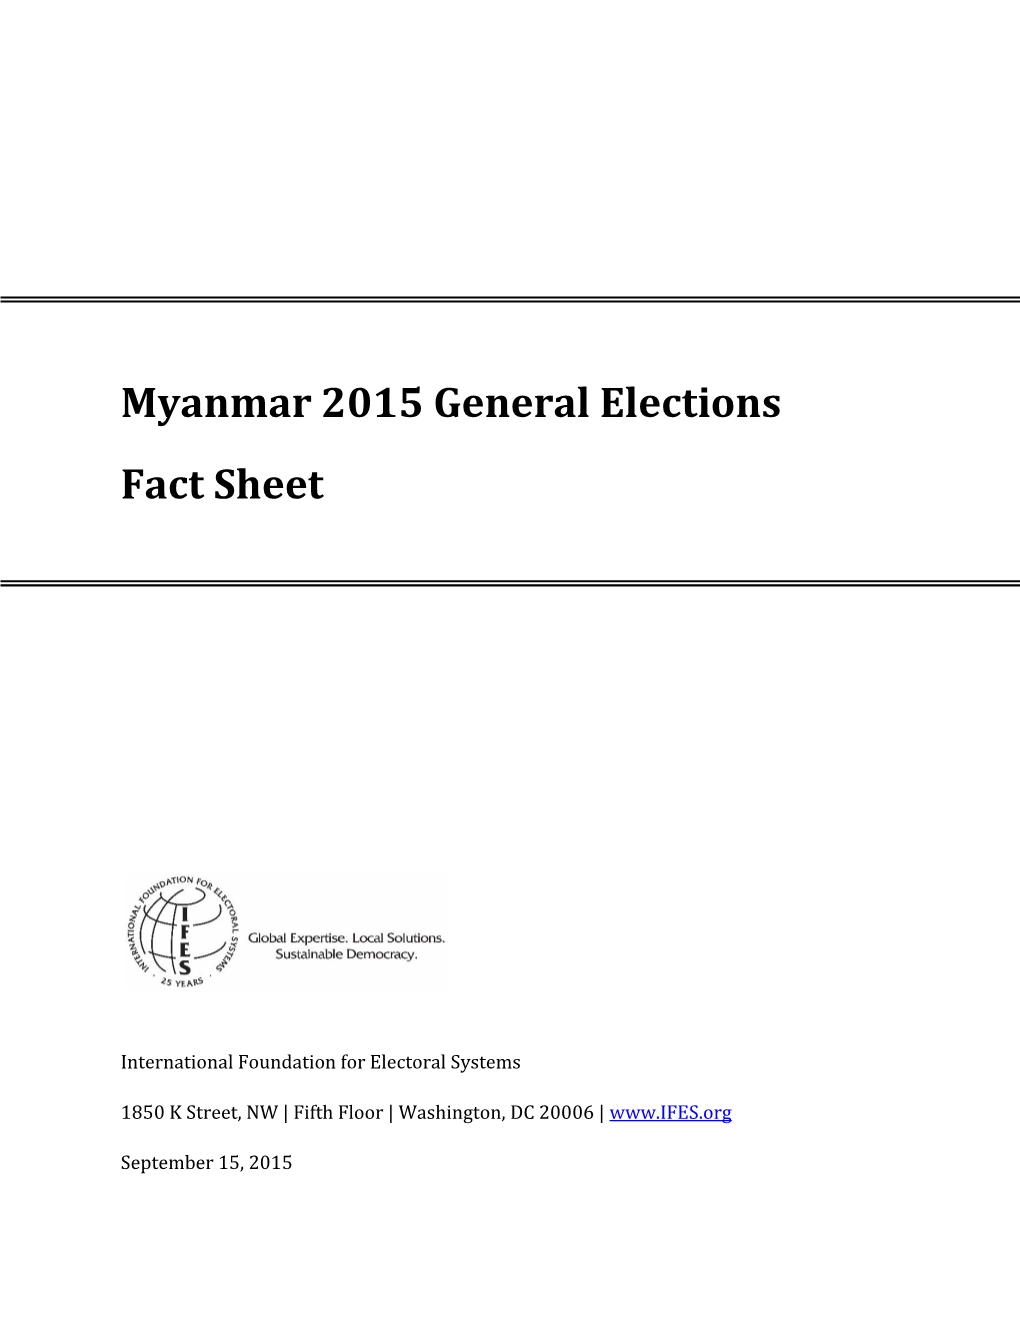 Myanmar 2015 General Elections Fact Sheet